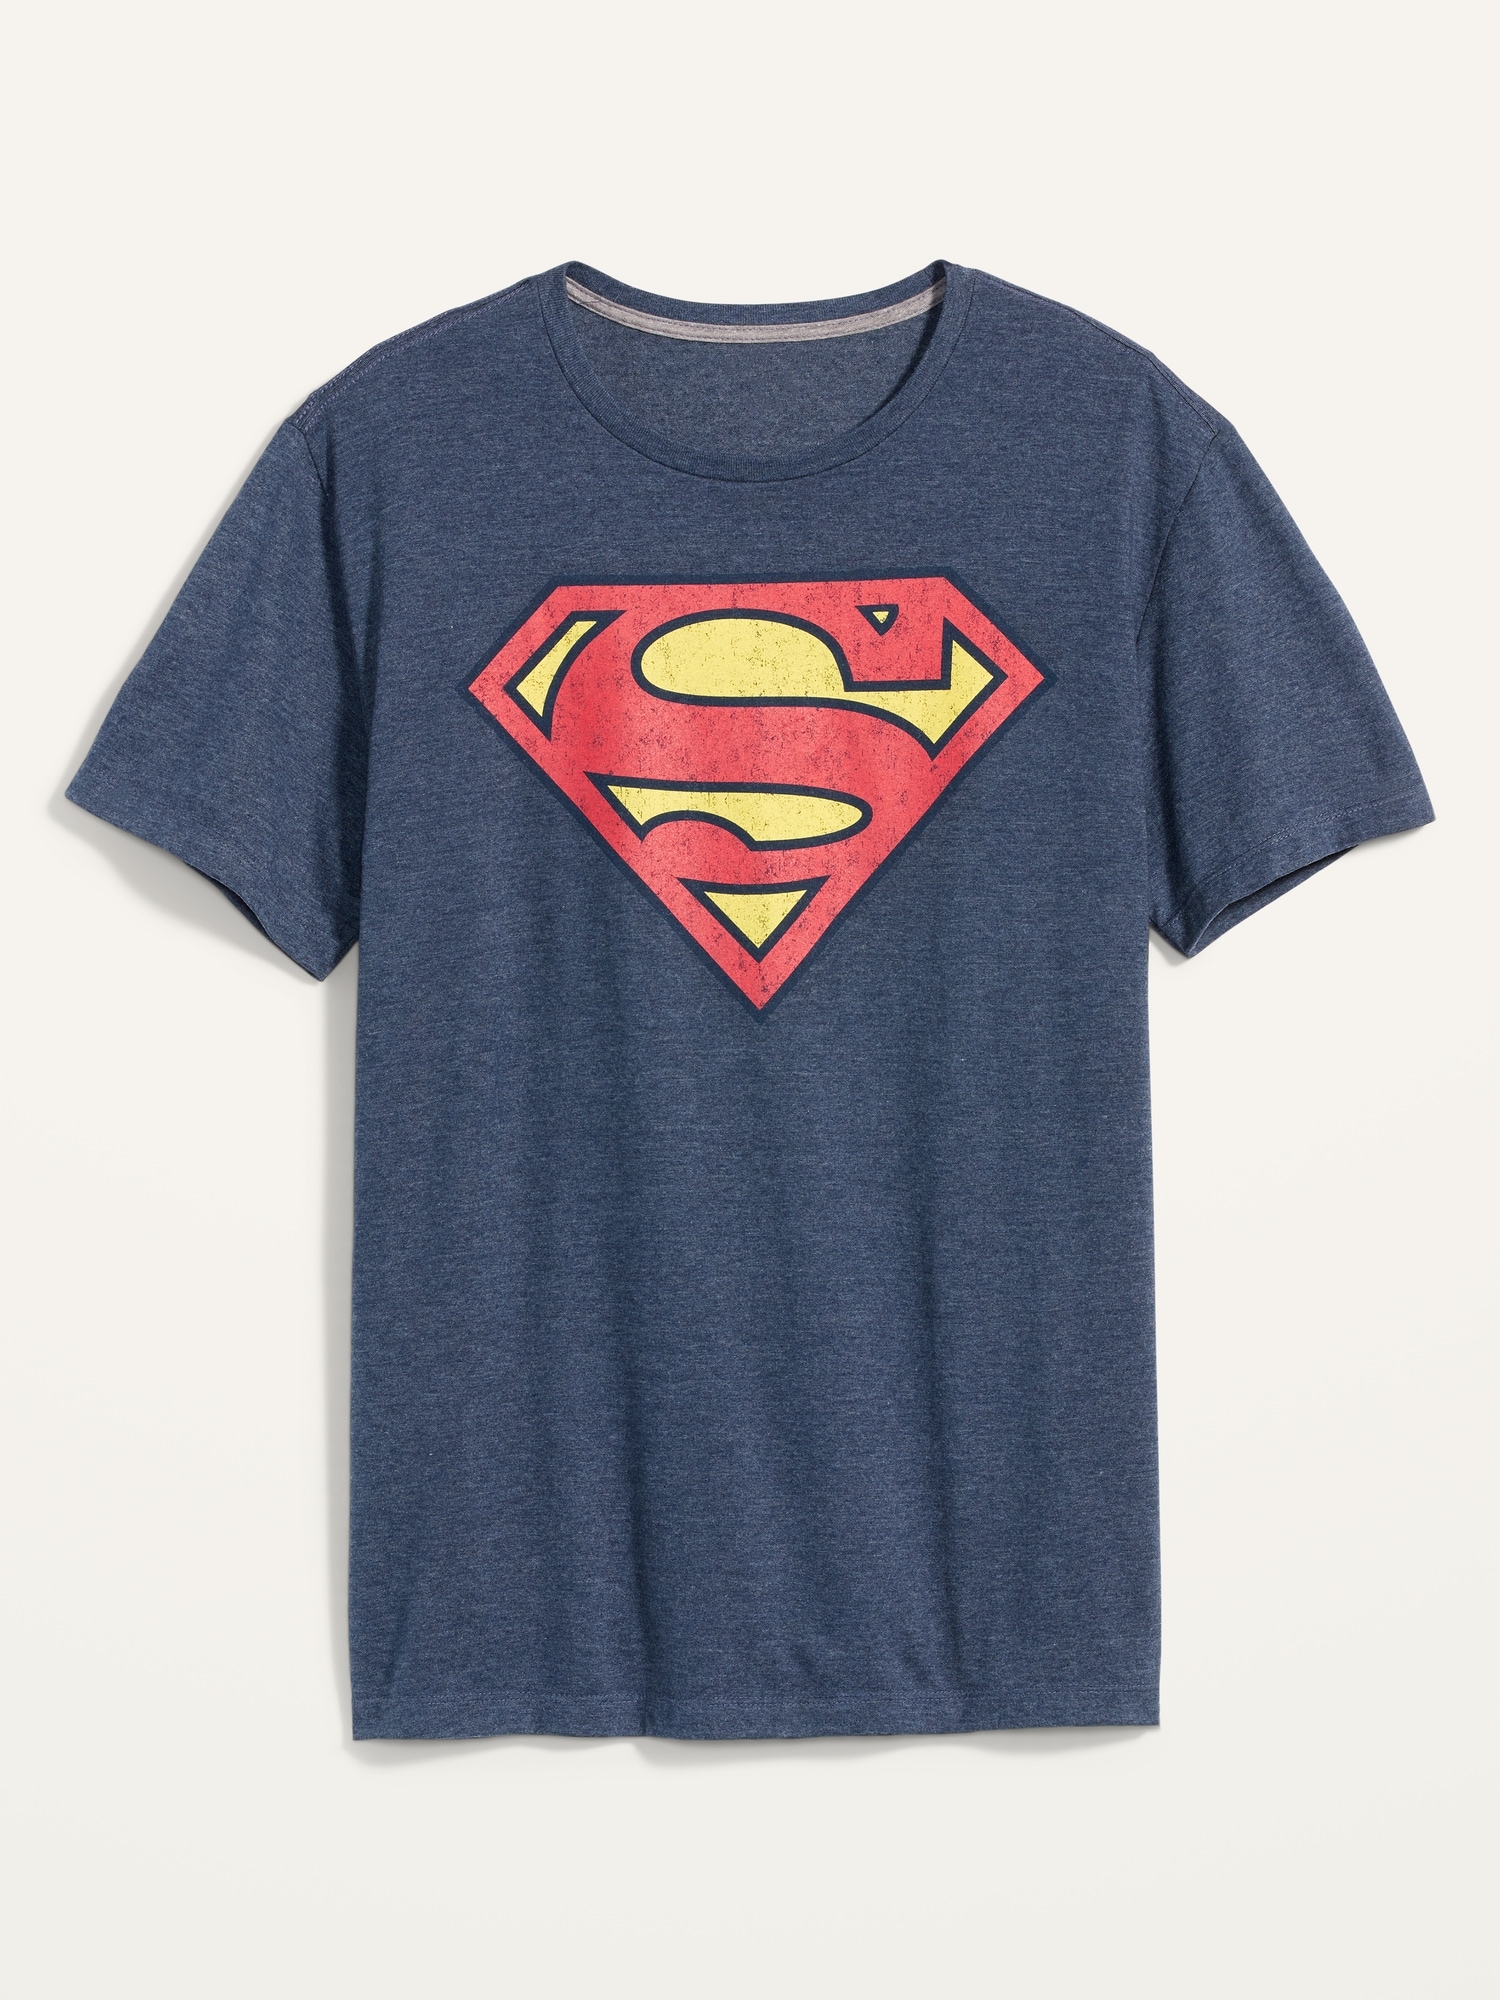 DC Comics Superman Gender-Neutral T-Shirt for Adults Hot Deal